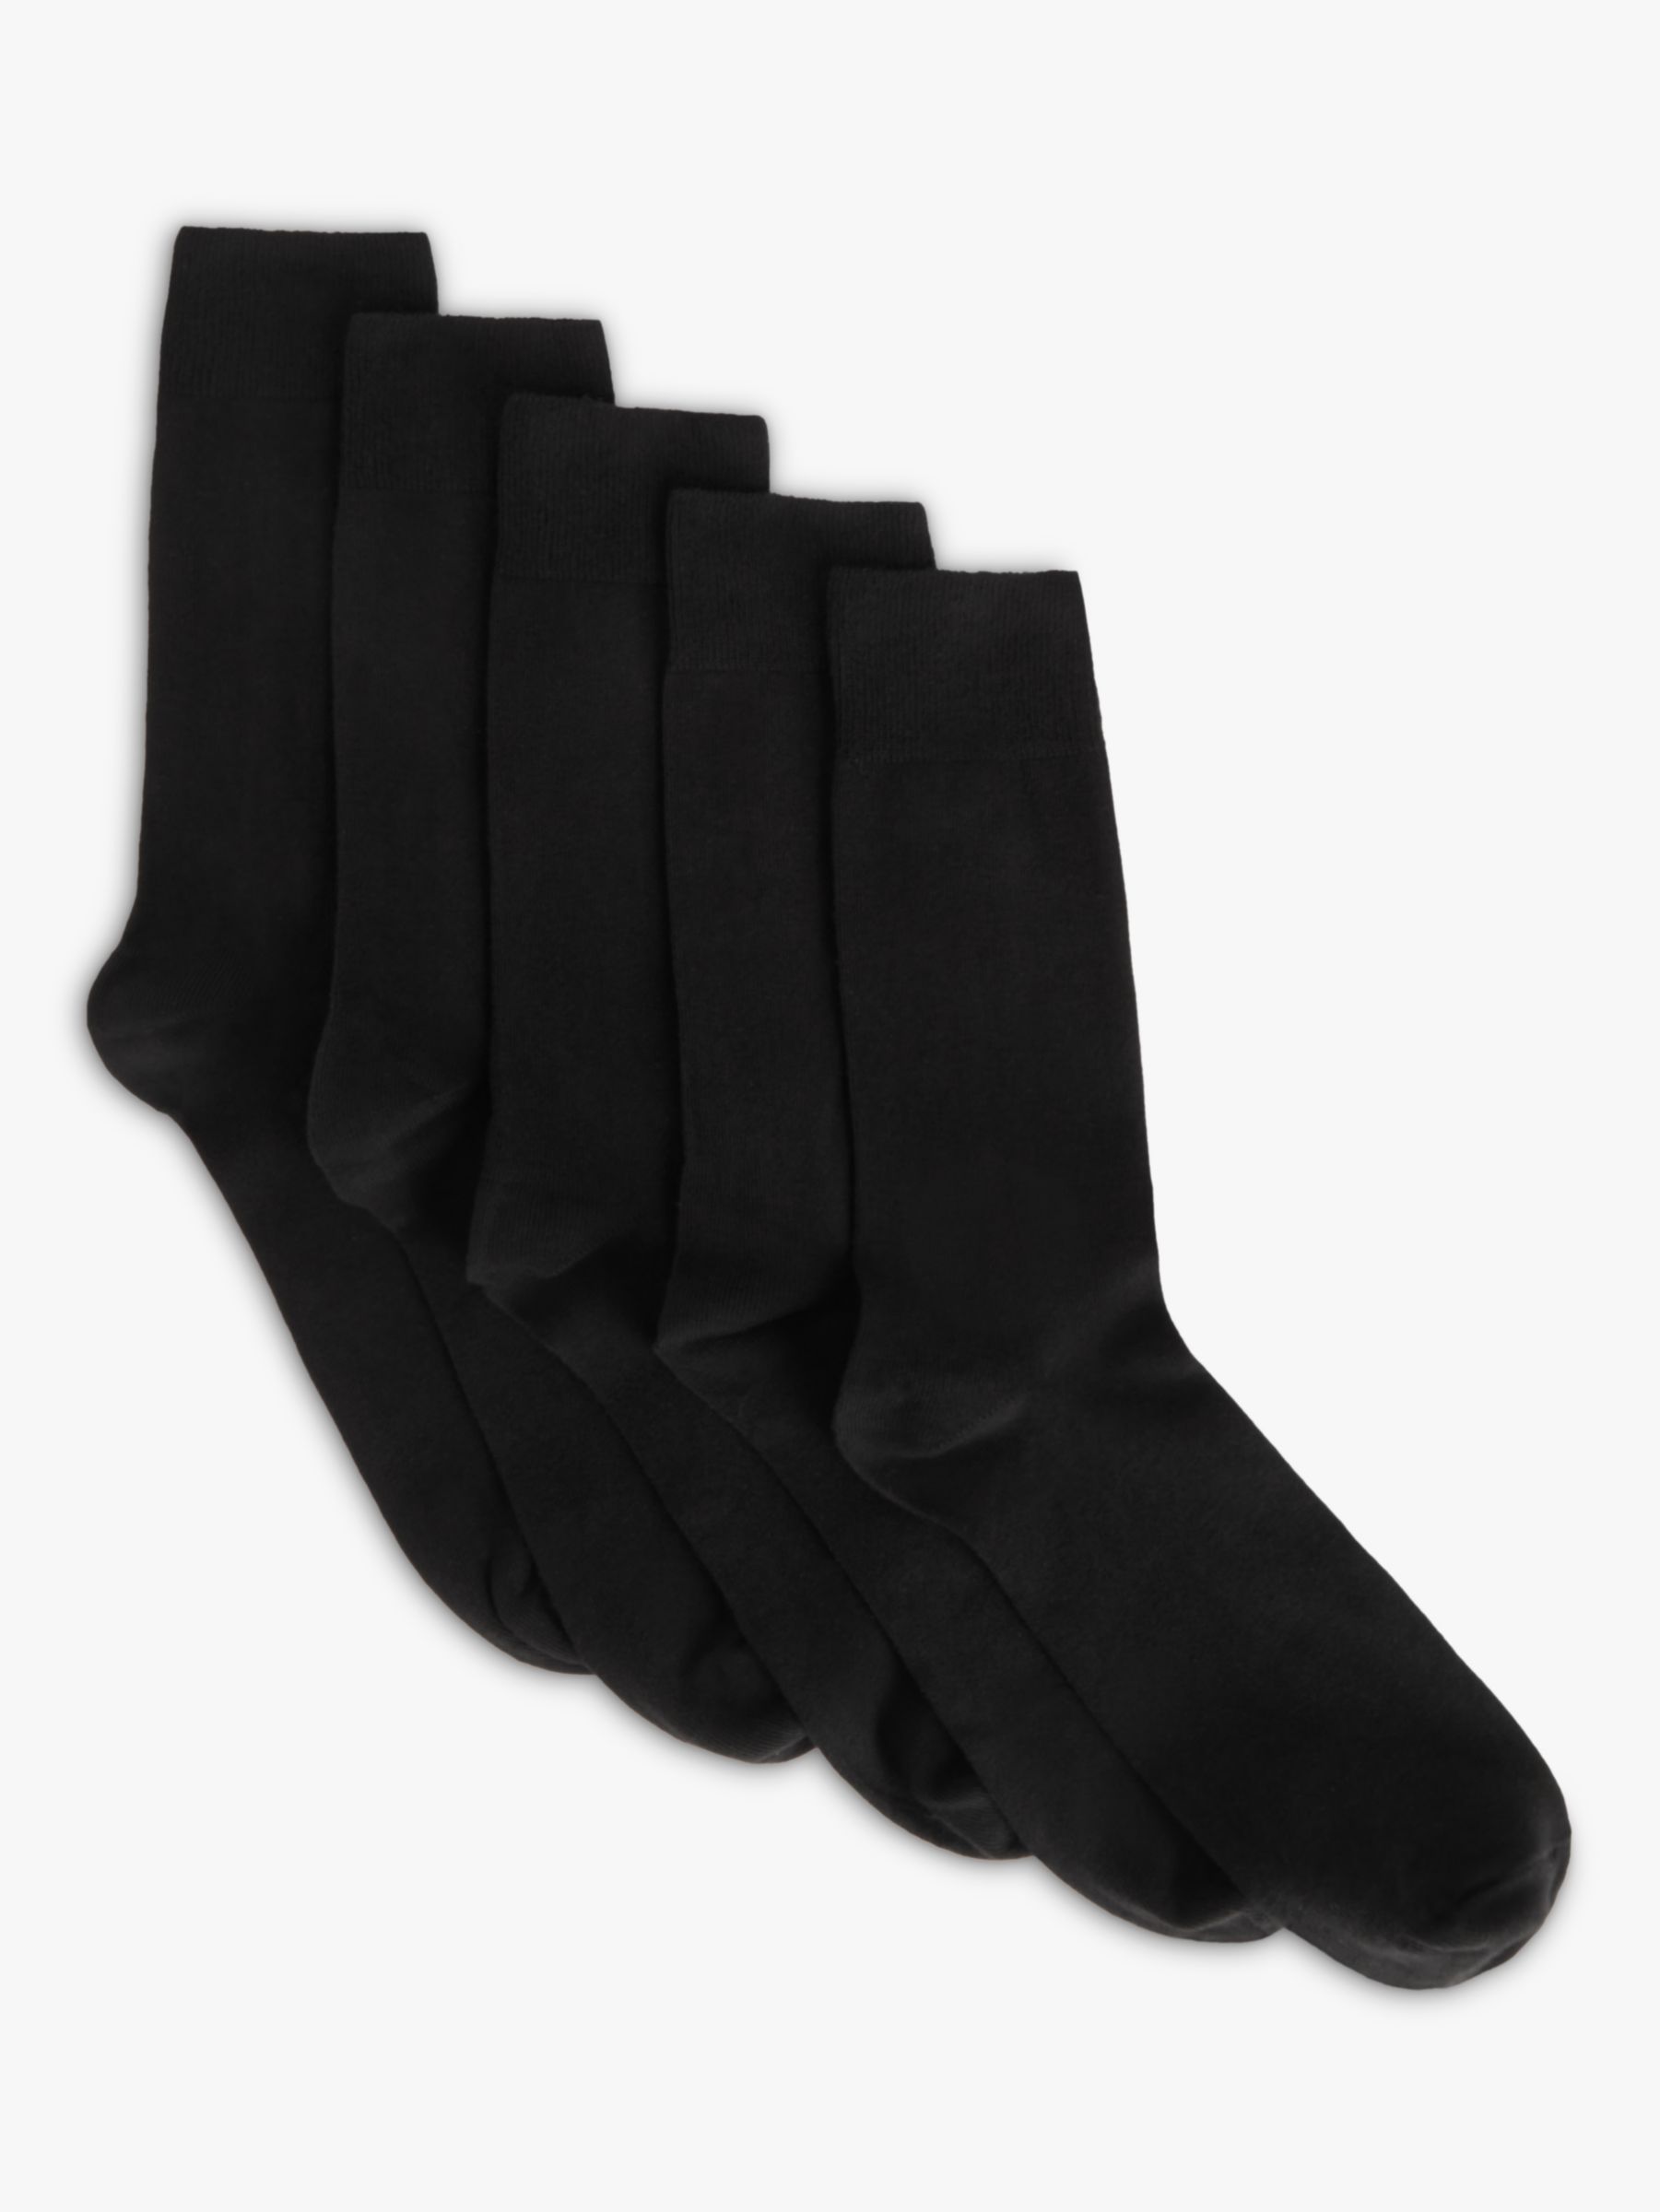 Men's Socks, Happy Socks, Calvin Klein, Thomas Pink